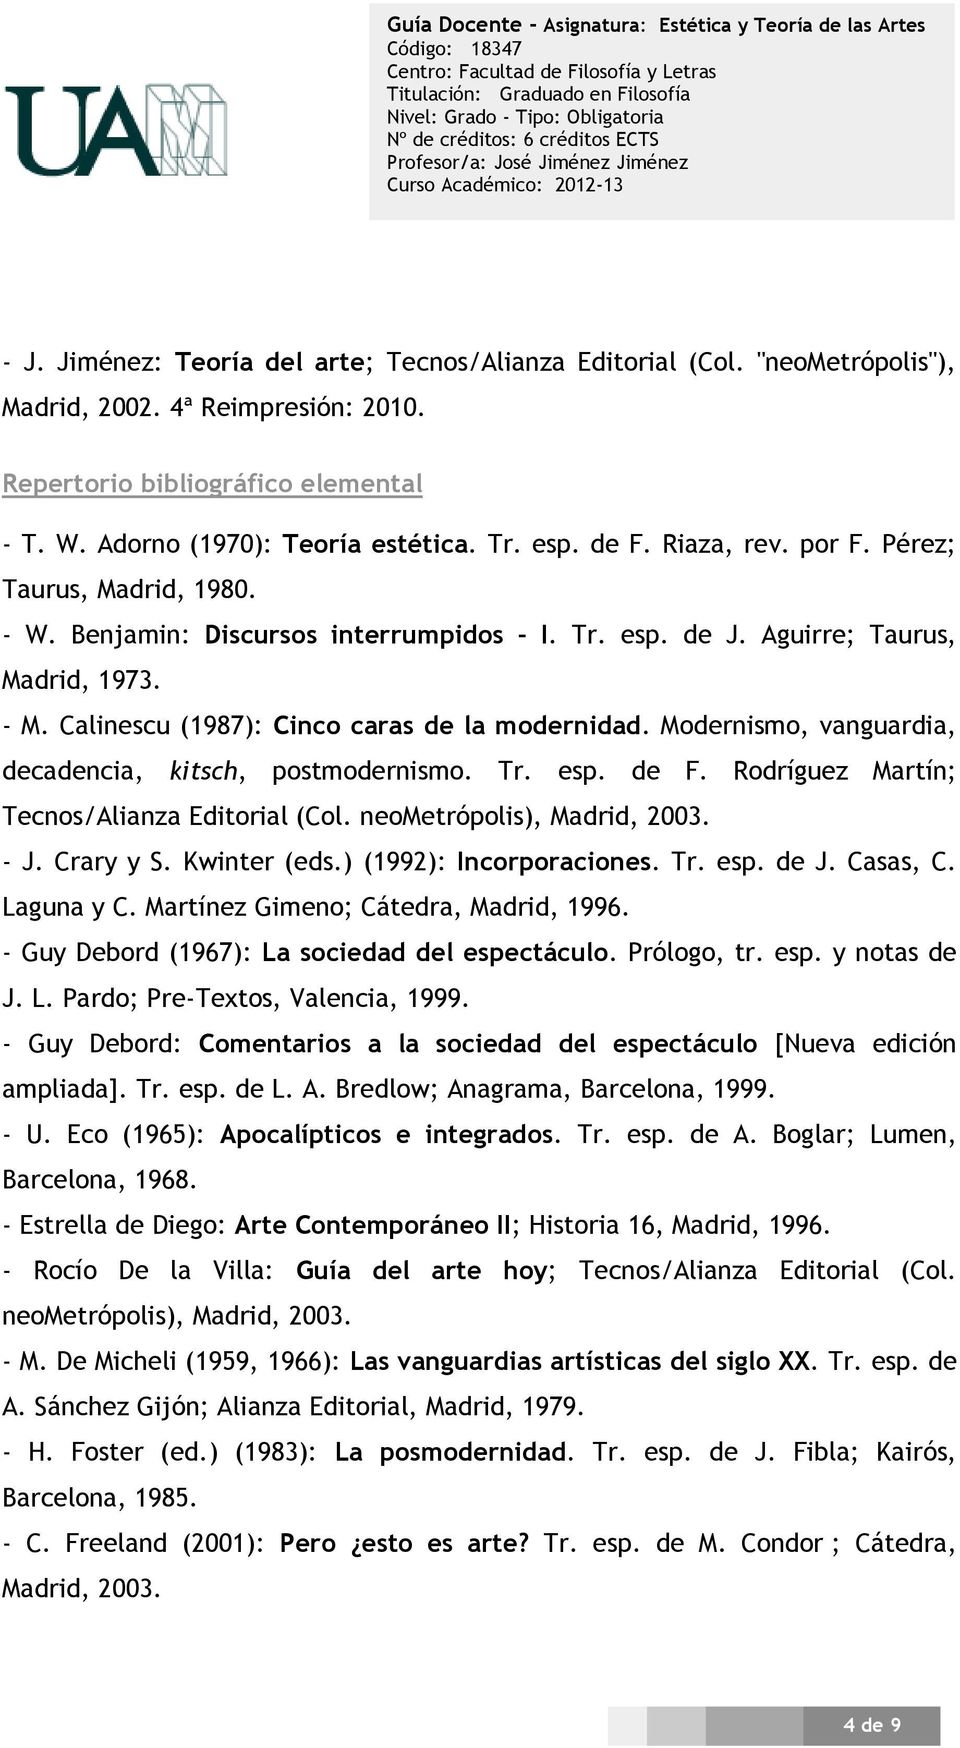 Modernismo, vanguardia, decadencia, kitsch, postmodernismo. Tr. esp. de F. Rodríguez Martín; Tecnos/Alianza Editorial (Col. neometrópolis), Madrid, 2003. - J. Crary y S. Kwinter (eds.